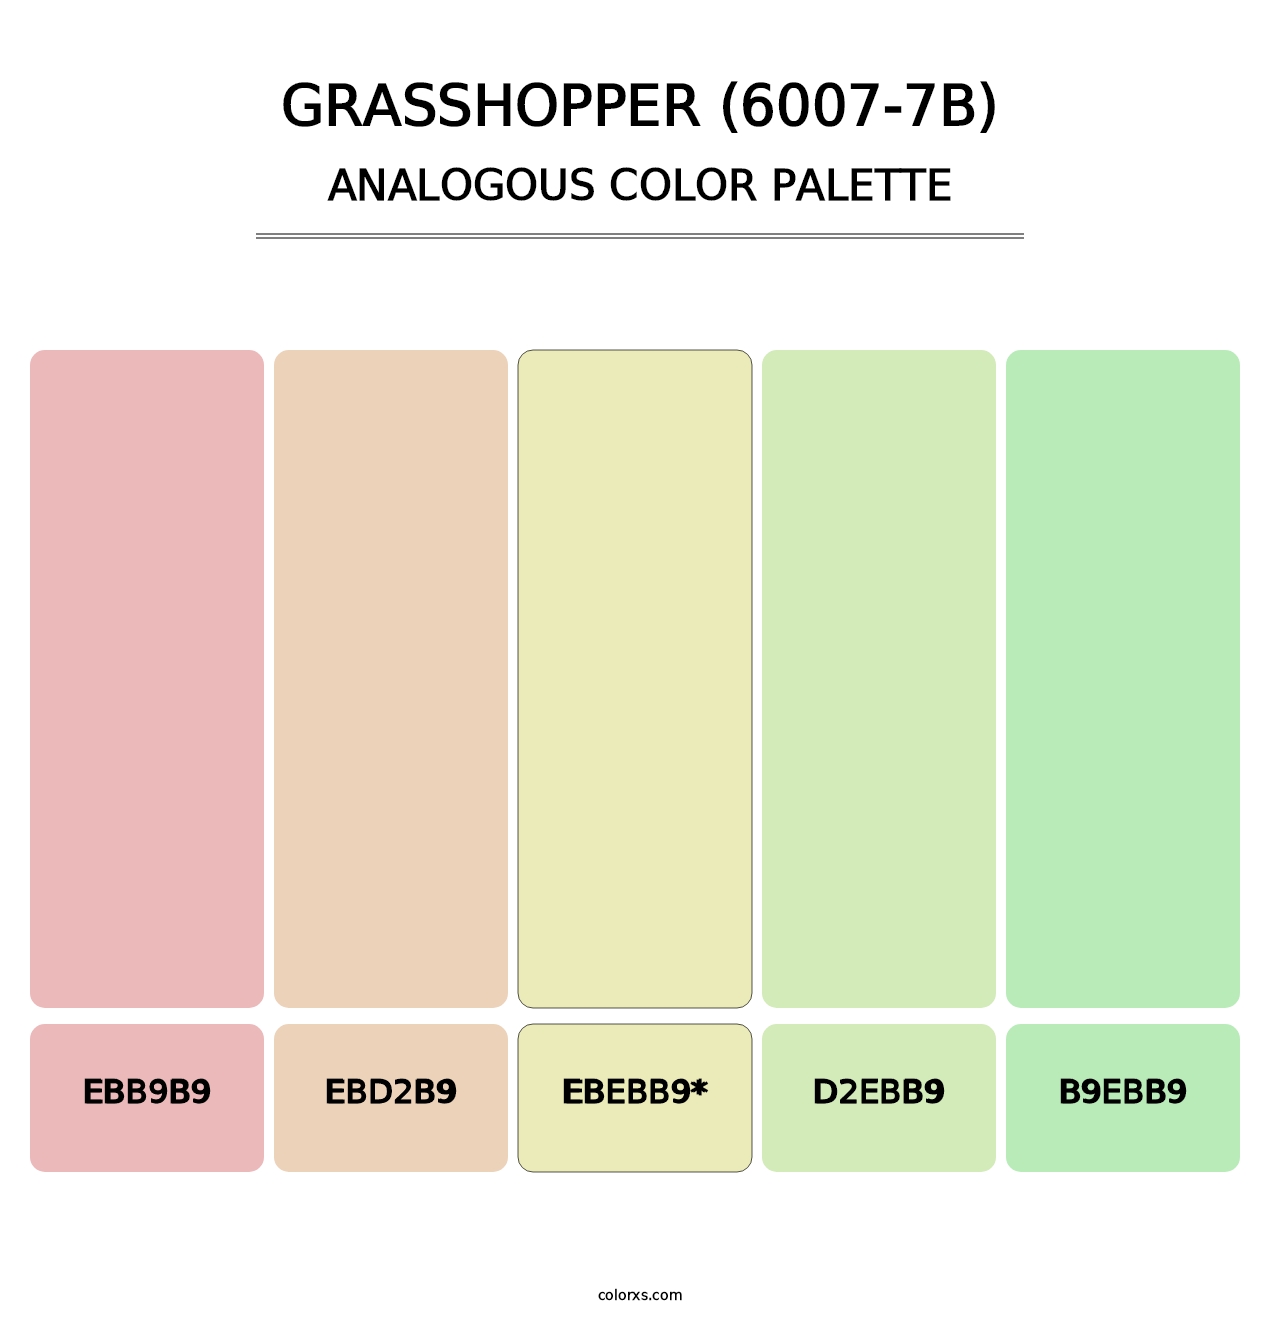 Grasshopper (6007-7B) - Analogous Color Palette